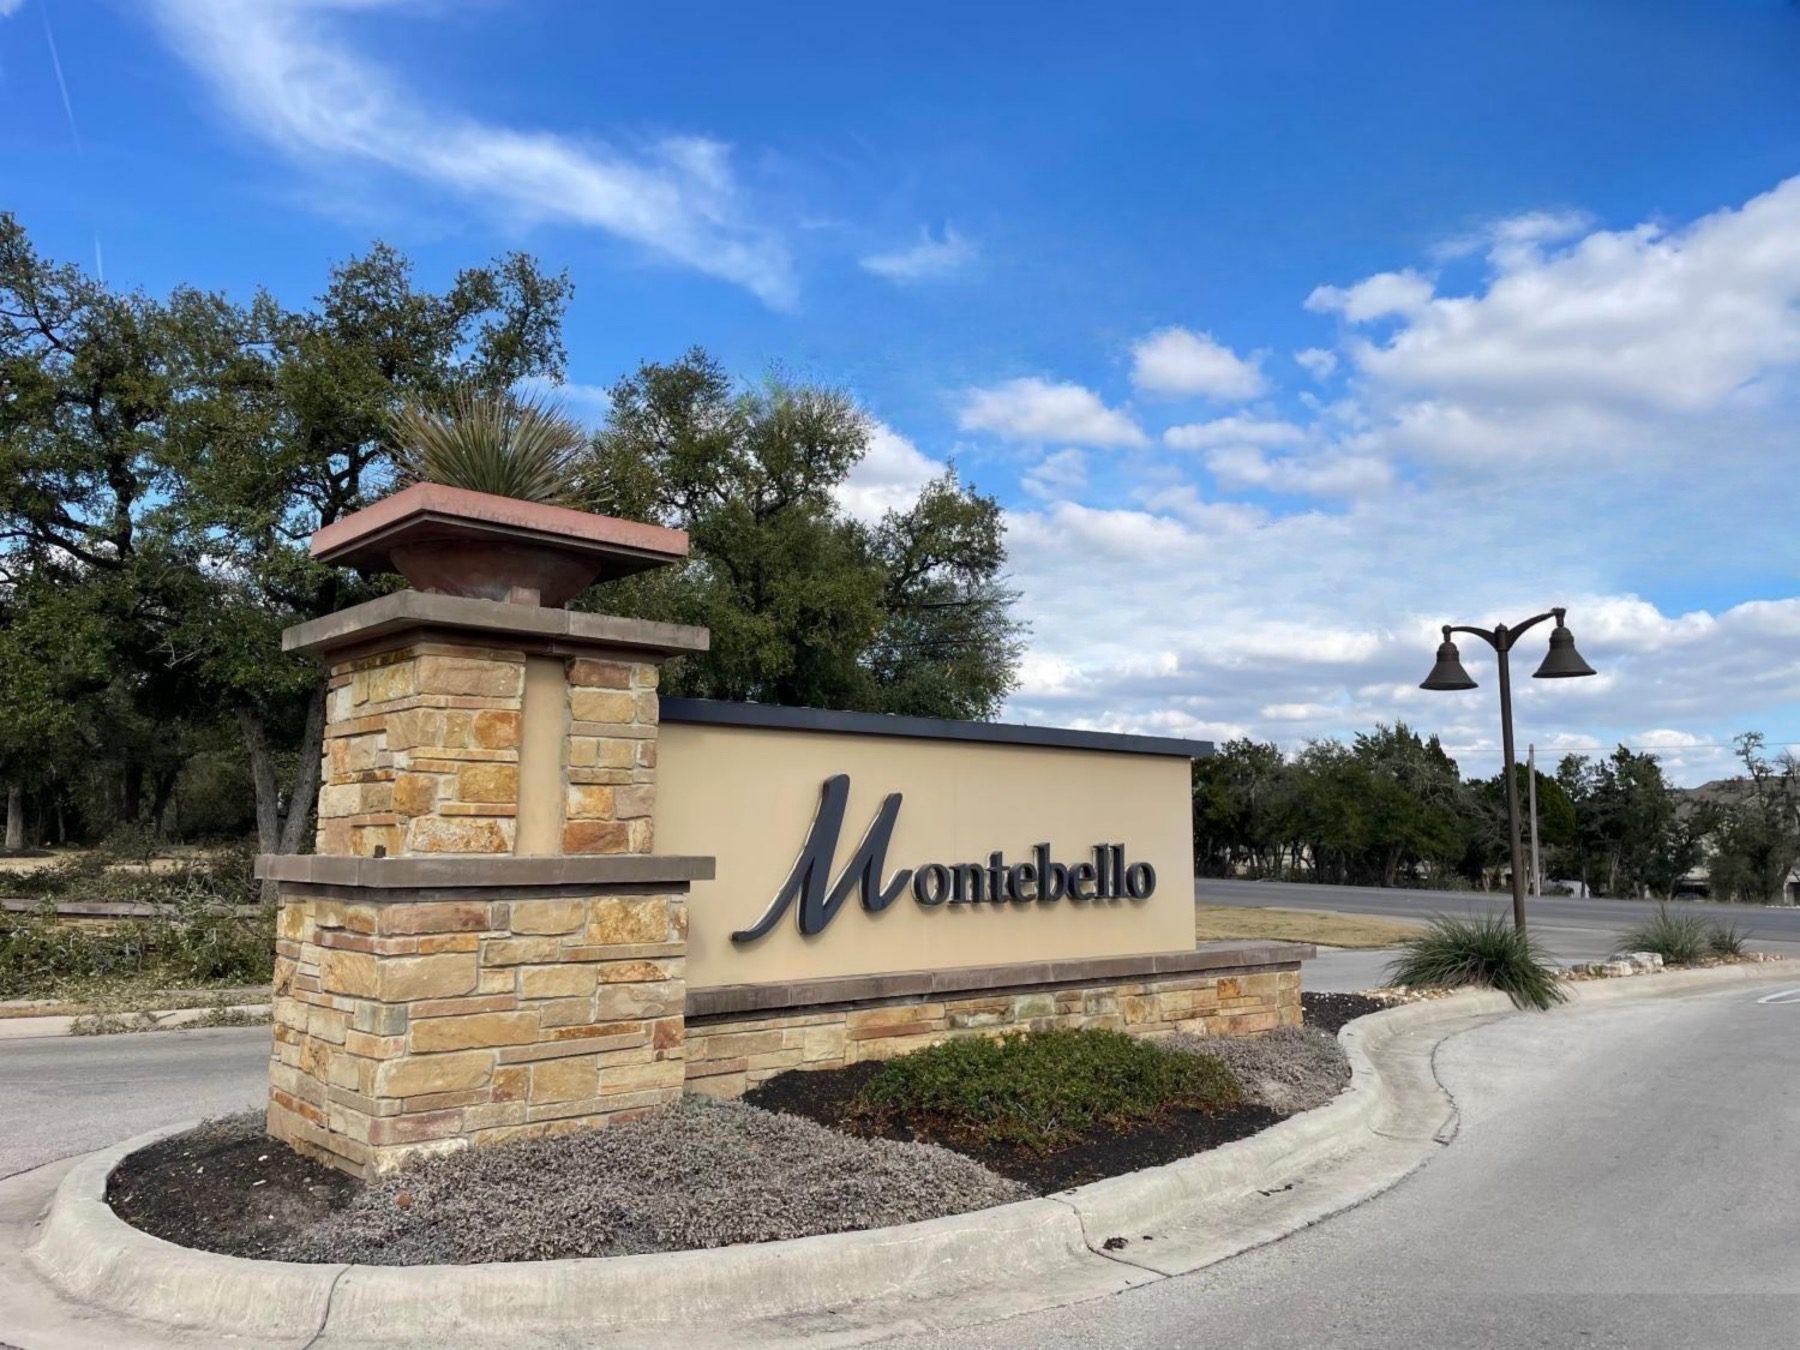 Montebello northwest Austin neighborhood guide